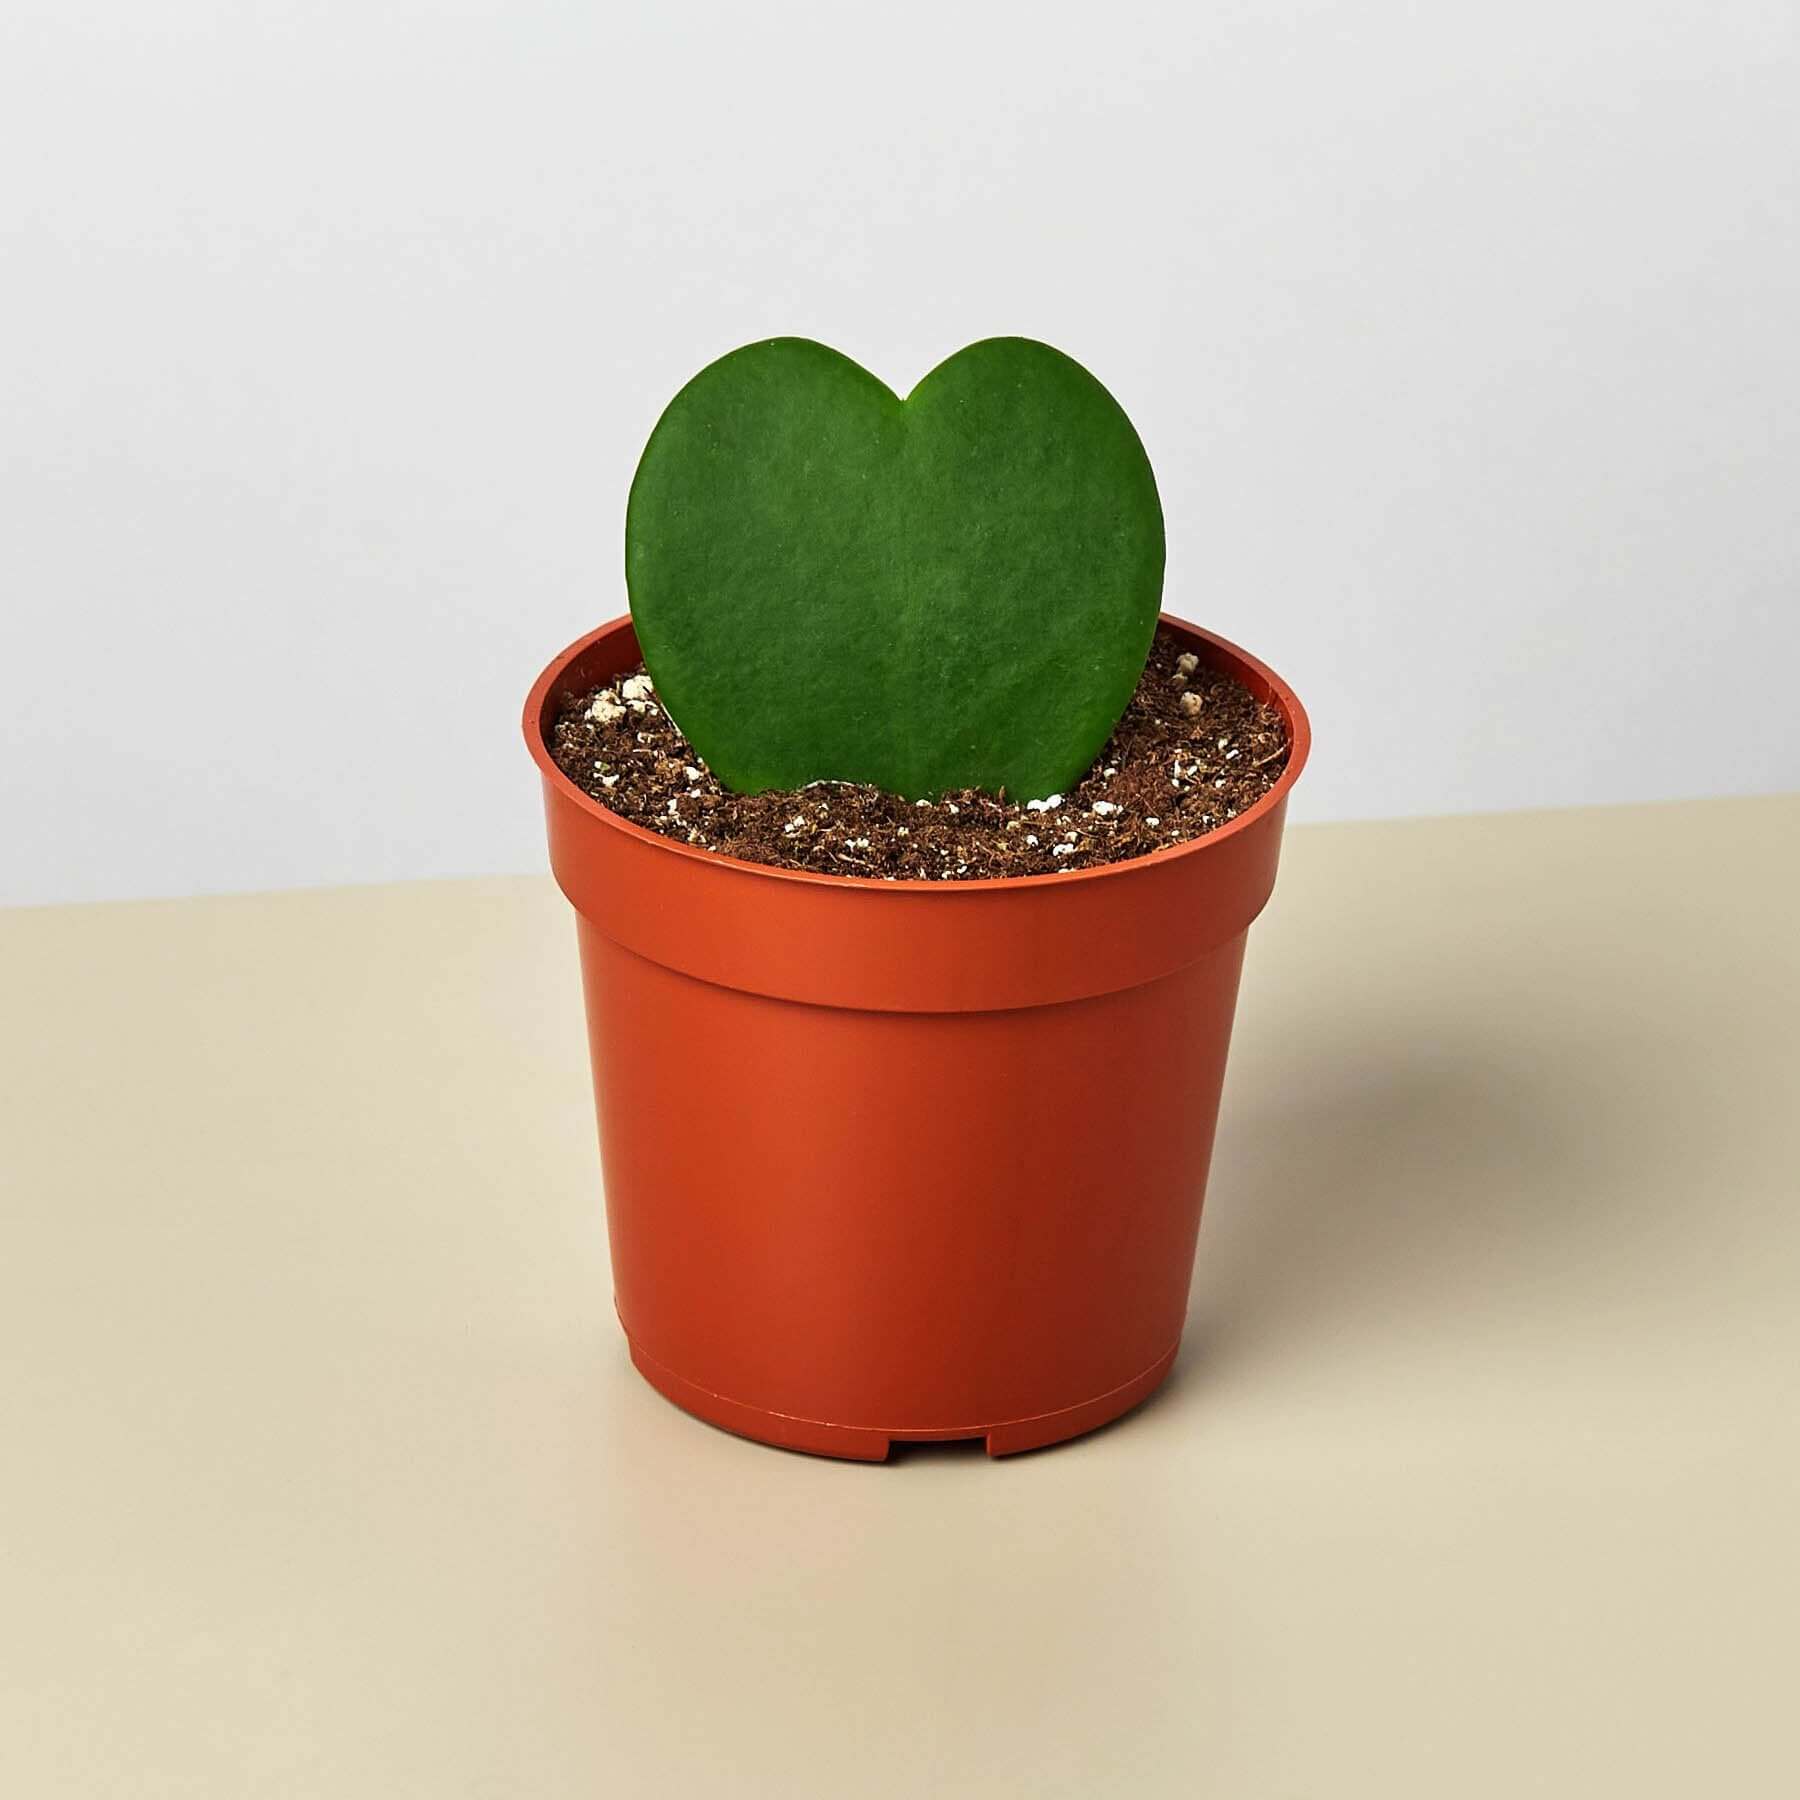 Hoya Sweetheart | Modern house plants that clean the air